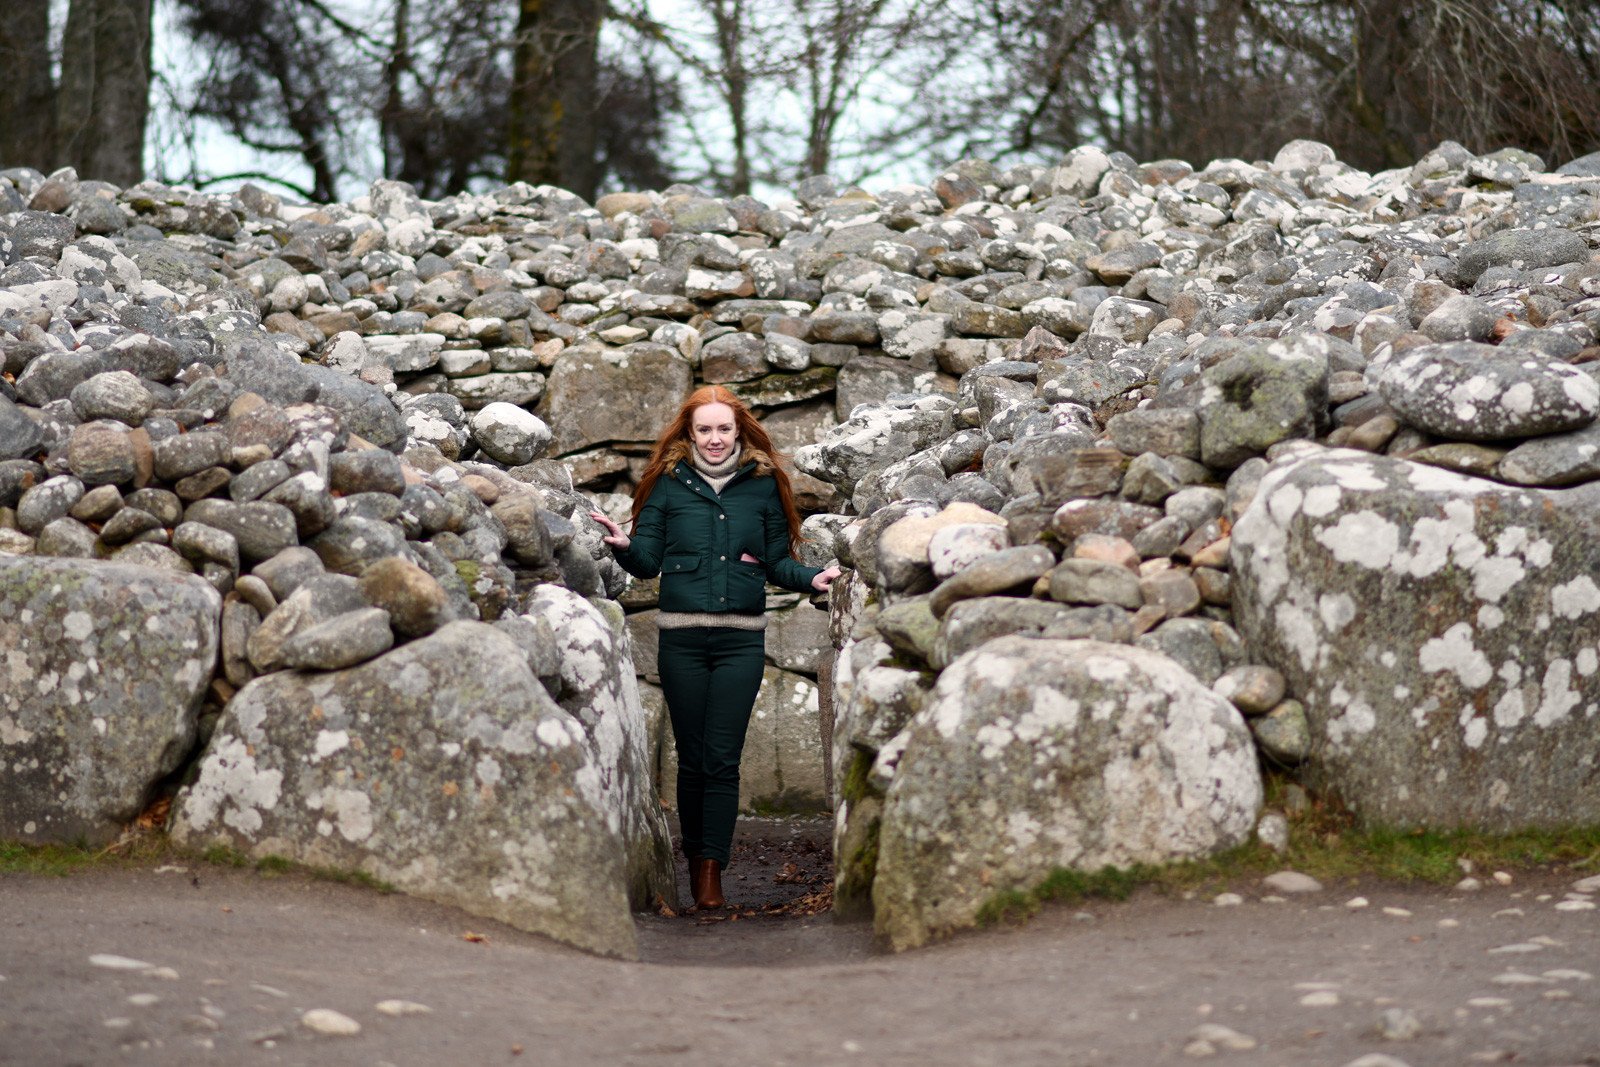 bronze age burial cairn near Inverness, Scotland - Clava Cairns